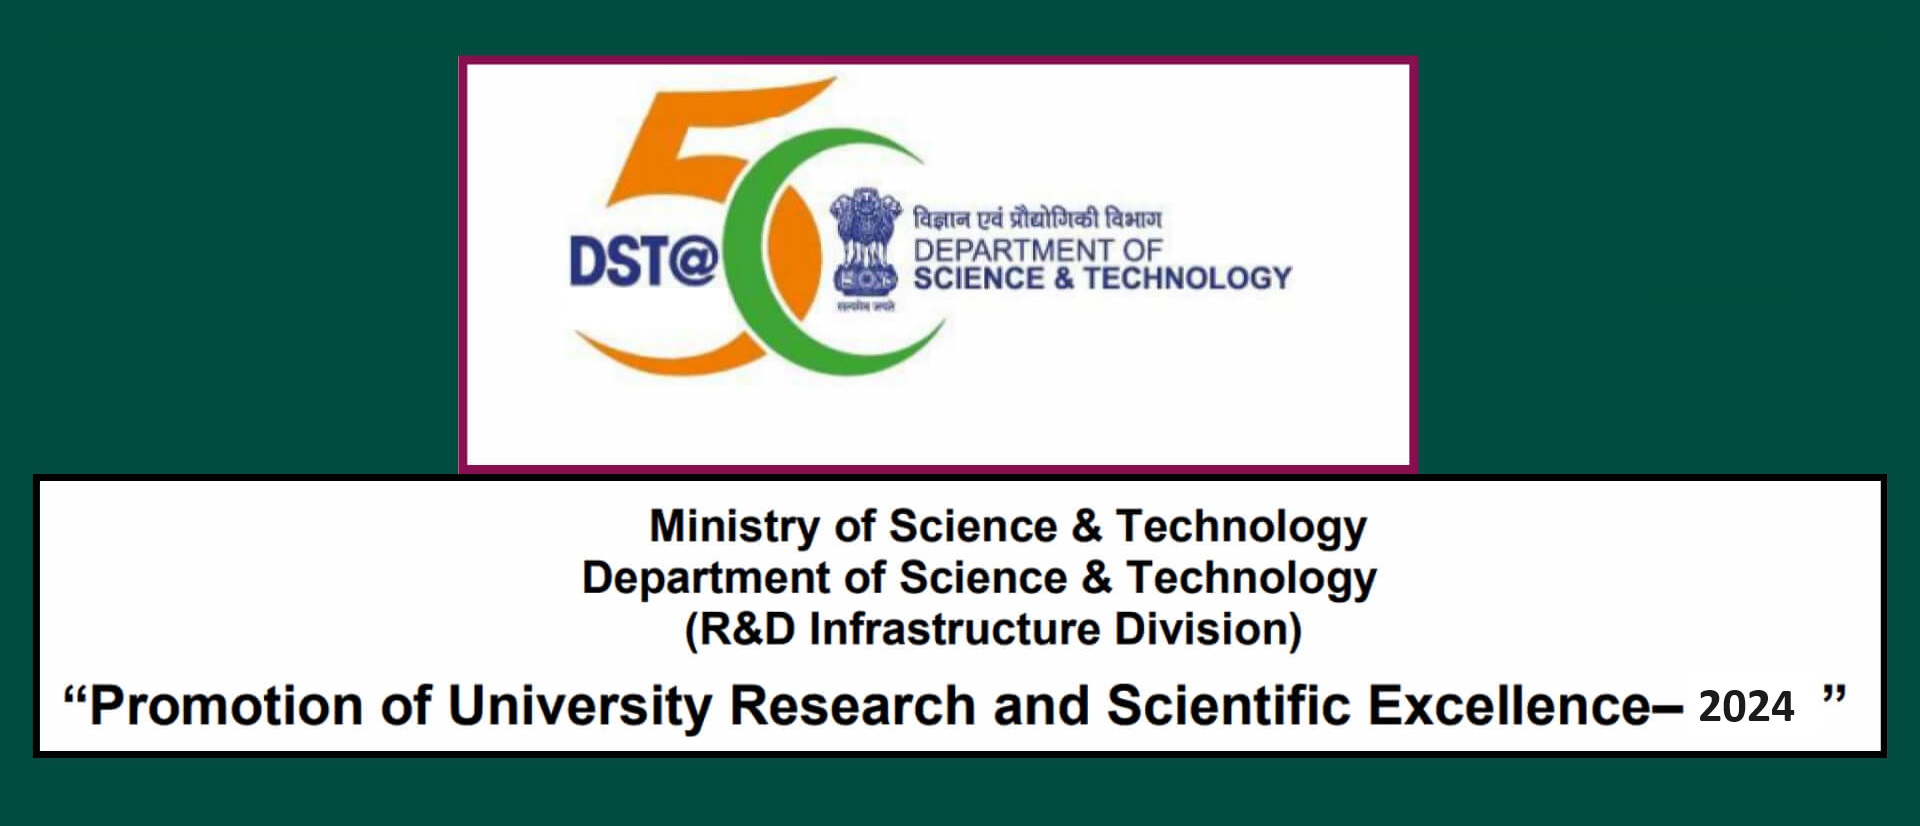 Invitation of Proposals Under PURSE scheme for Universities, DST, India